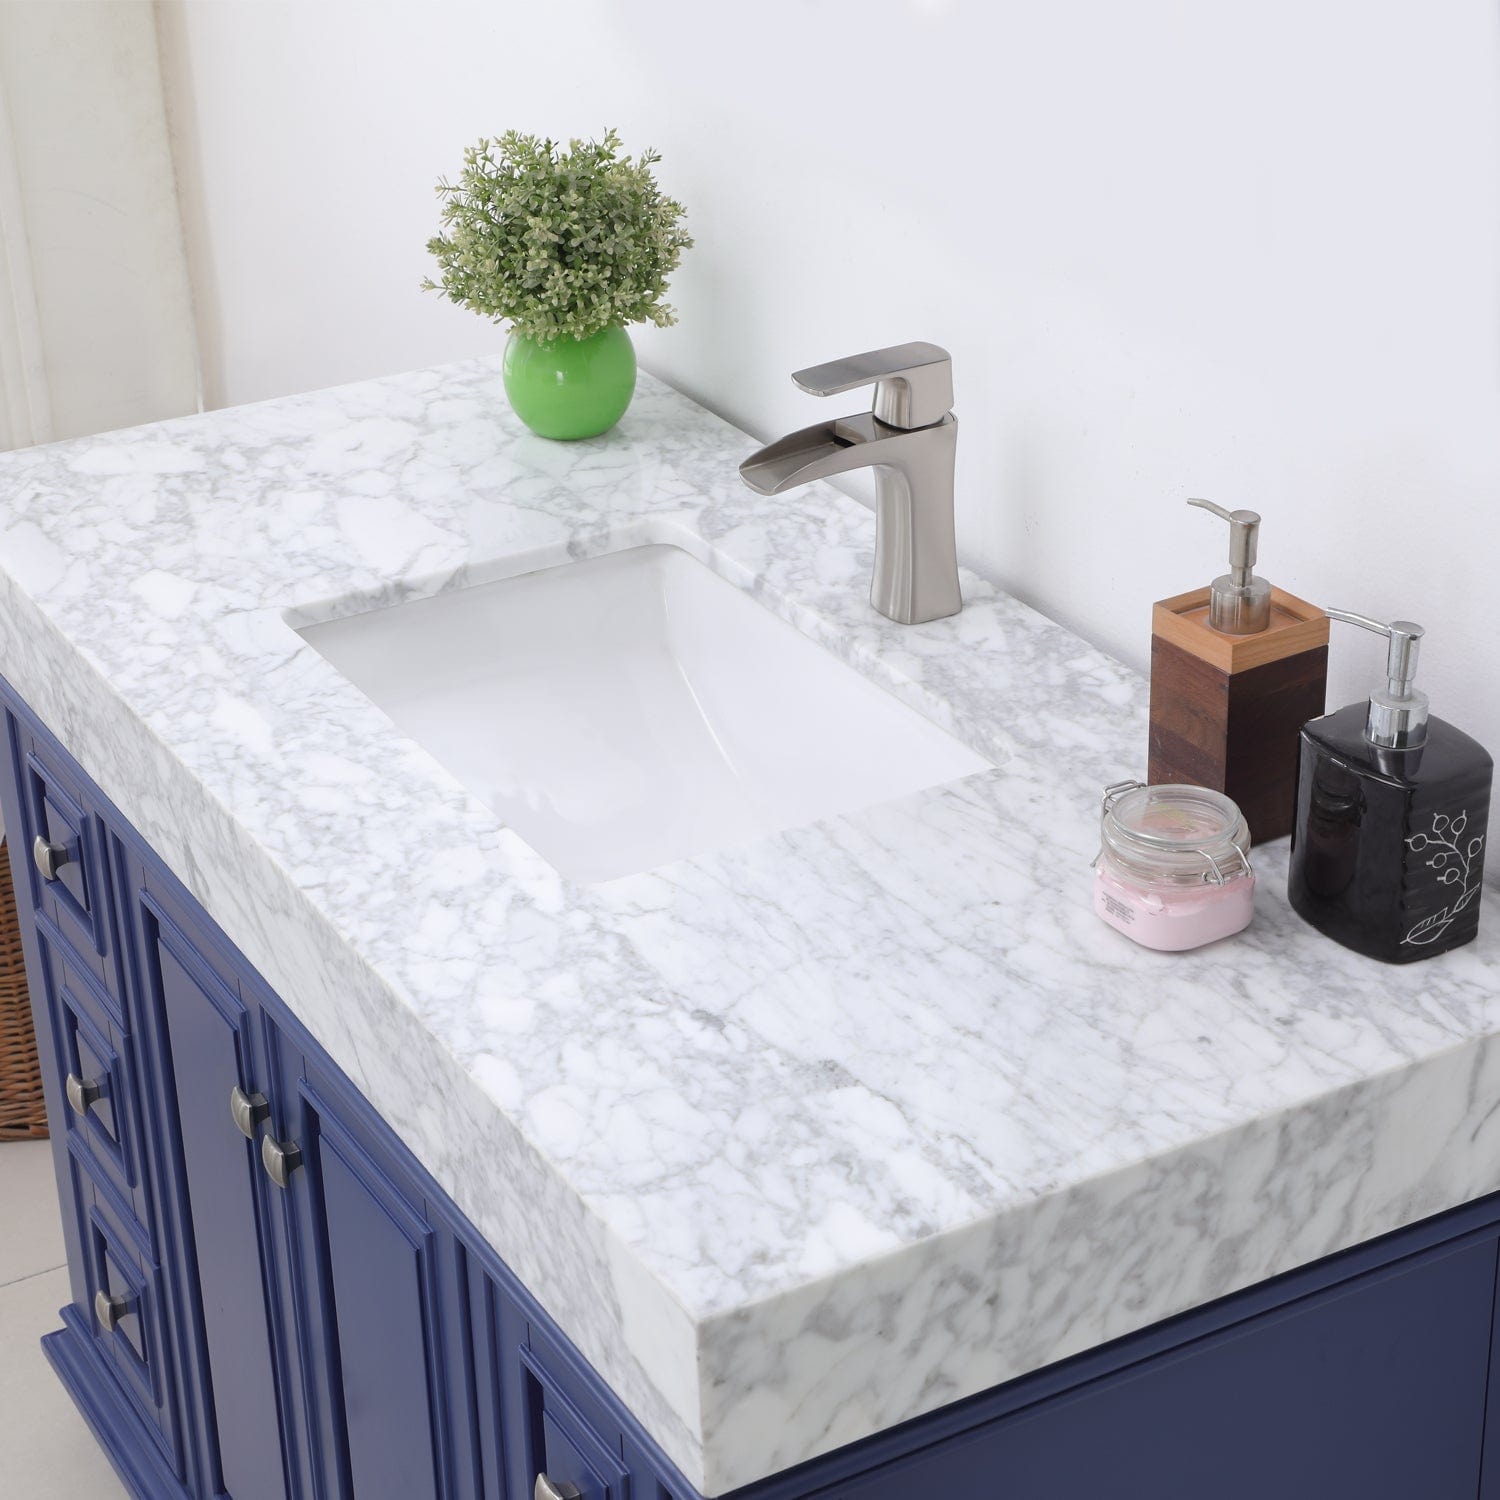 Altair Jardin 48" Single Bathroom Vanity Set in Jewelry Blue and Carrara White Marble Countertop without Mirror 539048-JB-CA-NM - Molaix631112971003Vanity539048-JB-CA-NM